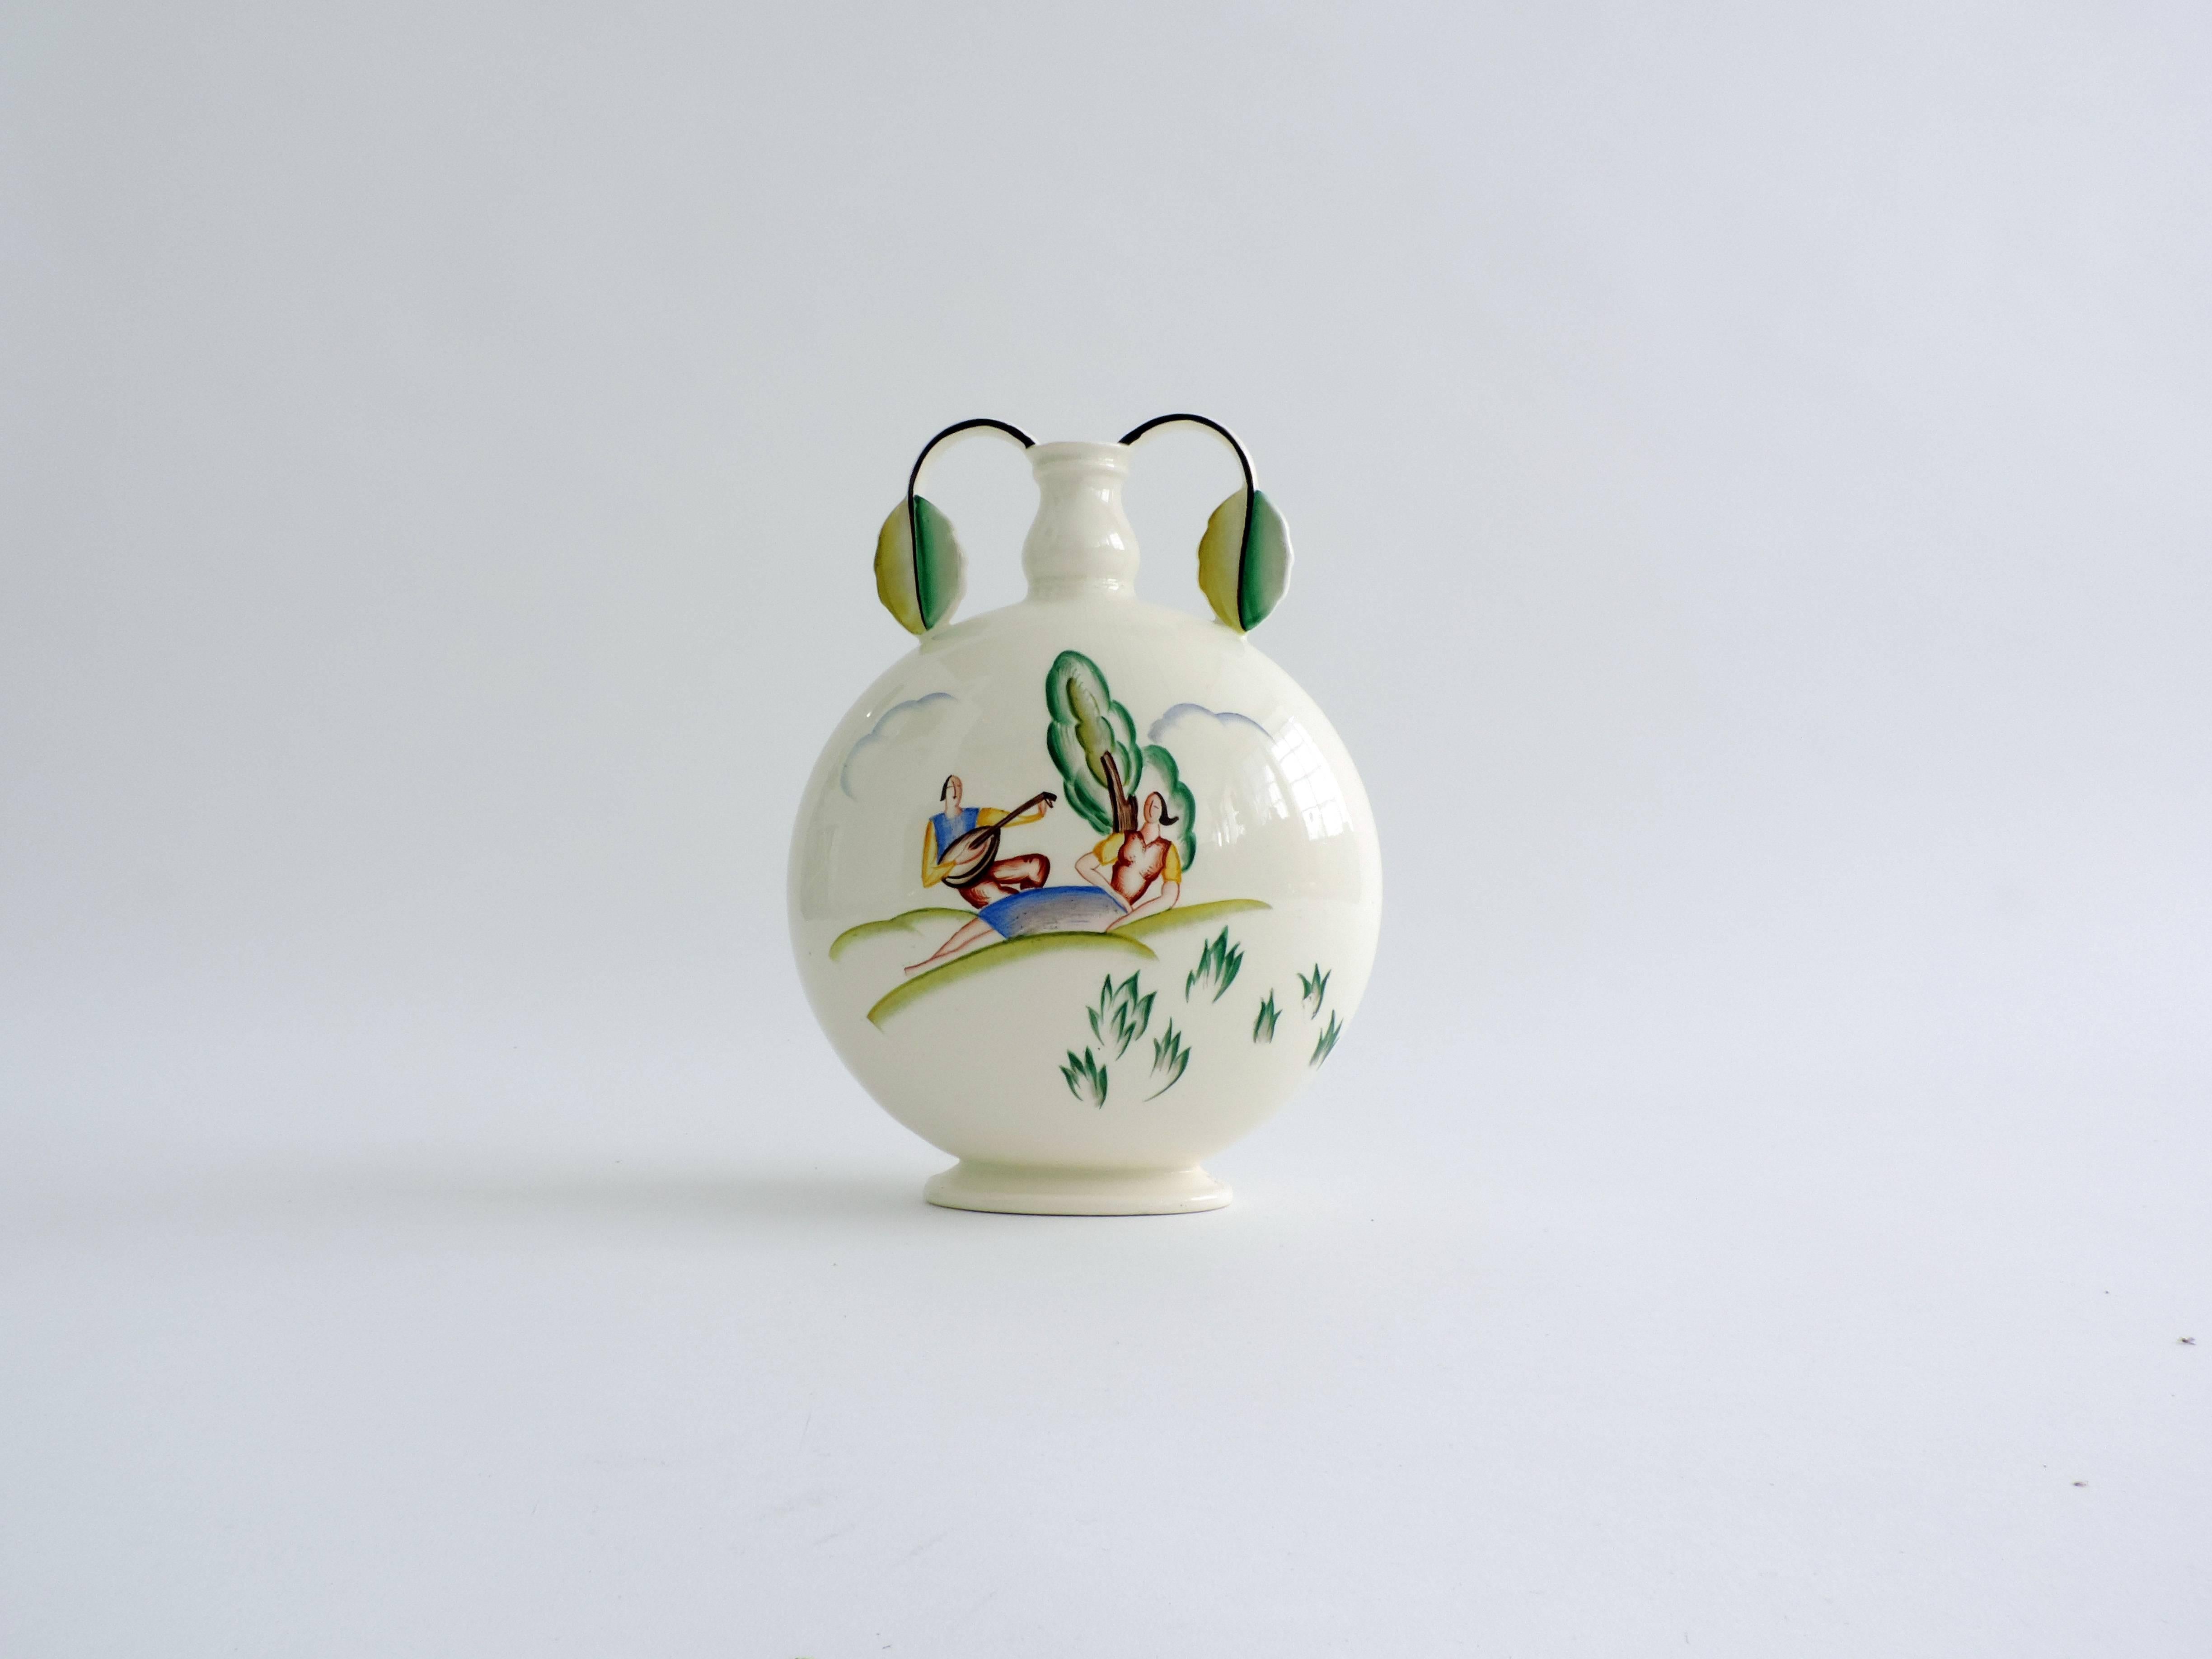 Art Deco Guido Andlovitz ceramic vase for S.C.I Laveno, Italy, 1940s.